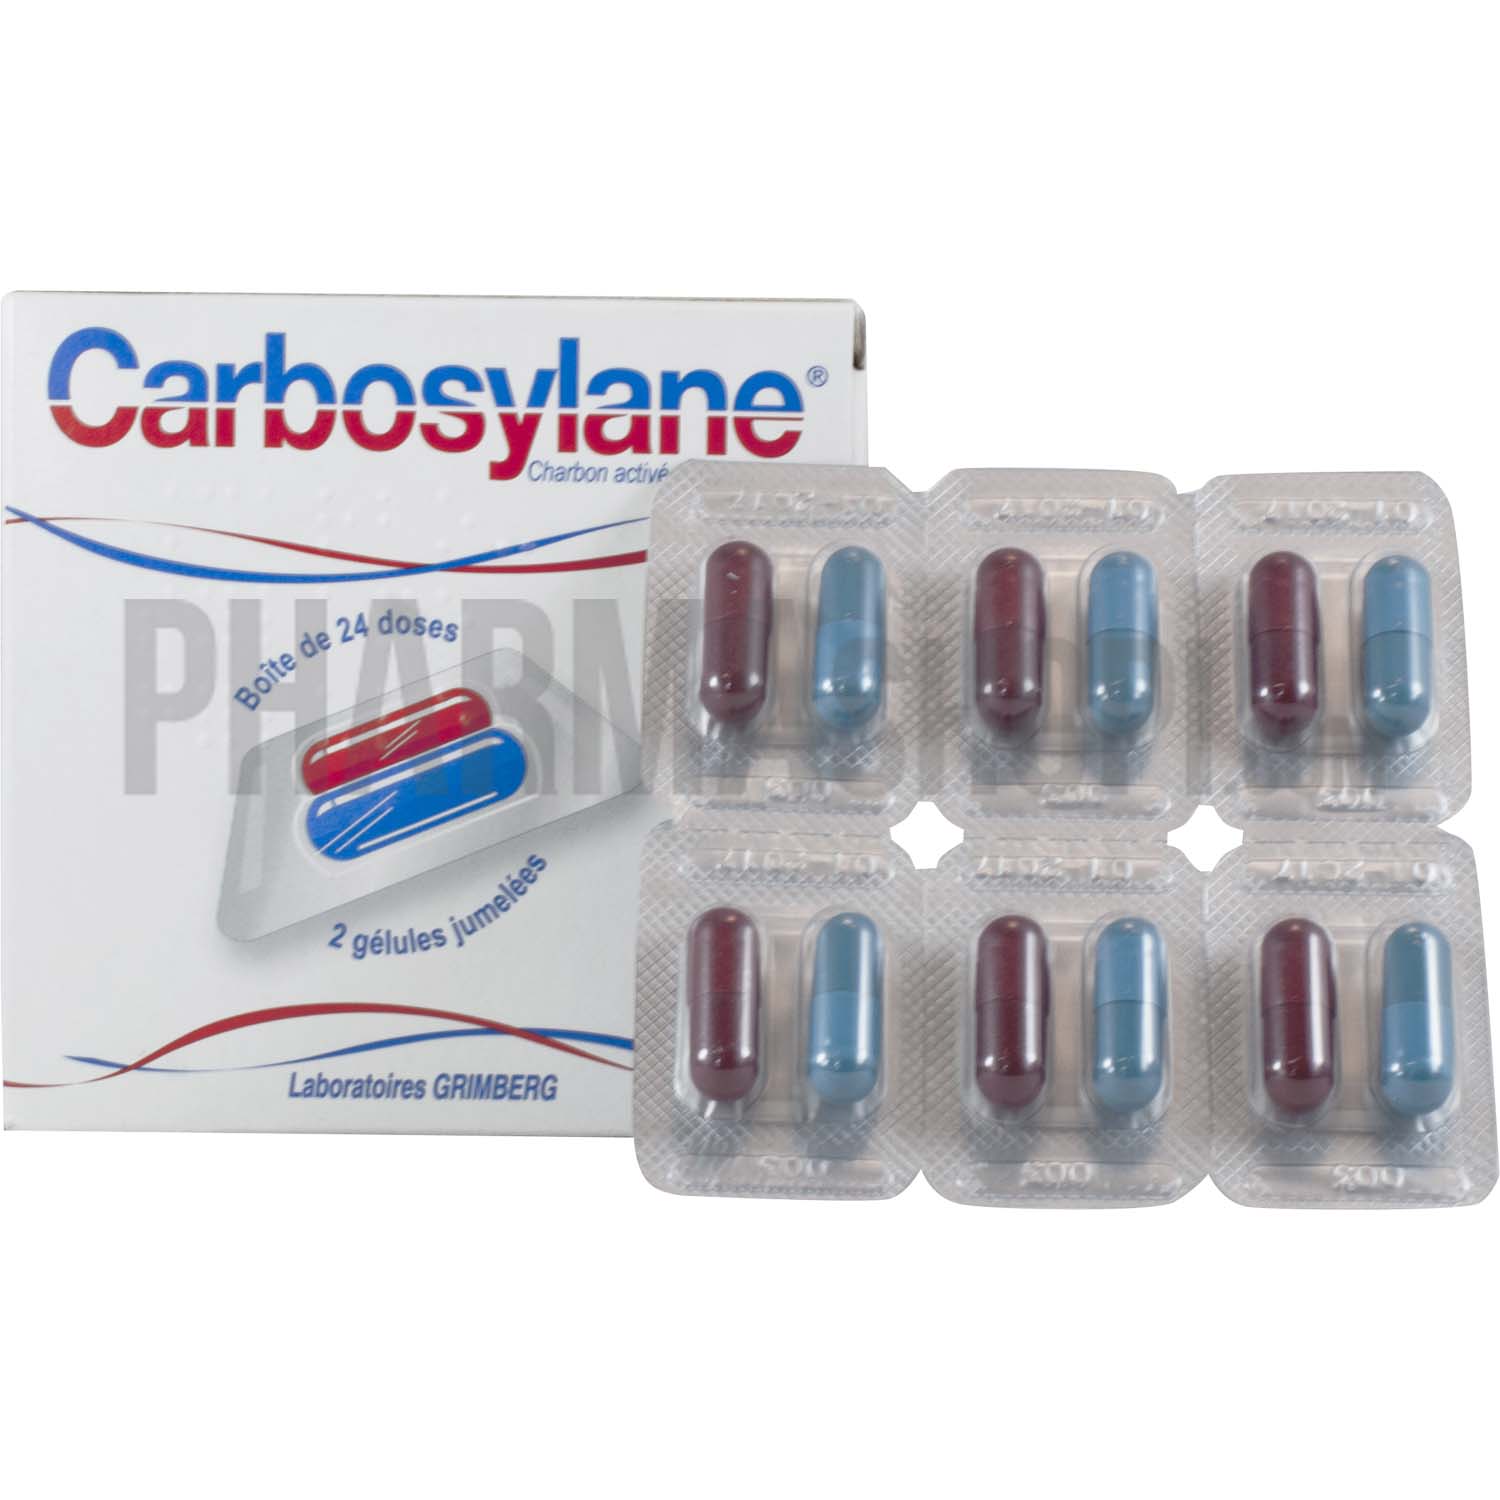 Carbosylane 24 doses - boîte de 48 gélules